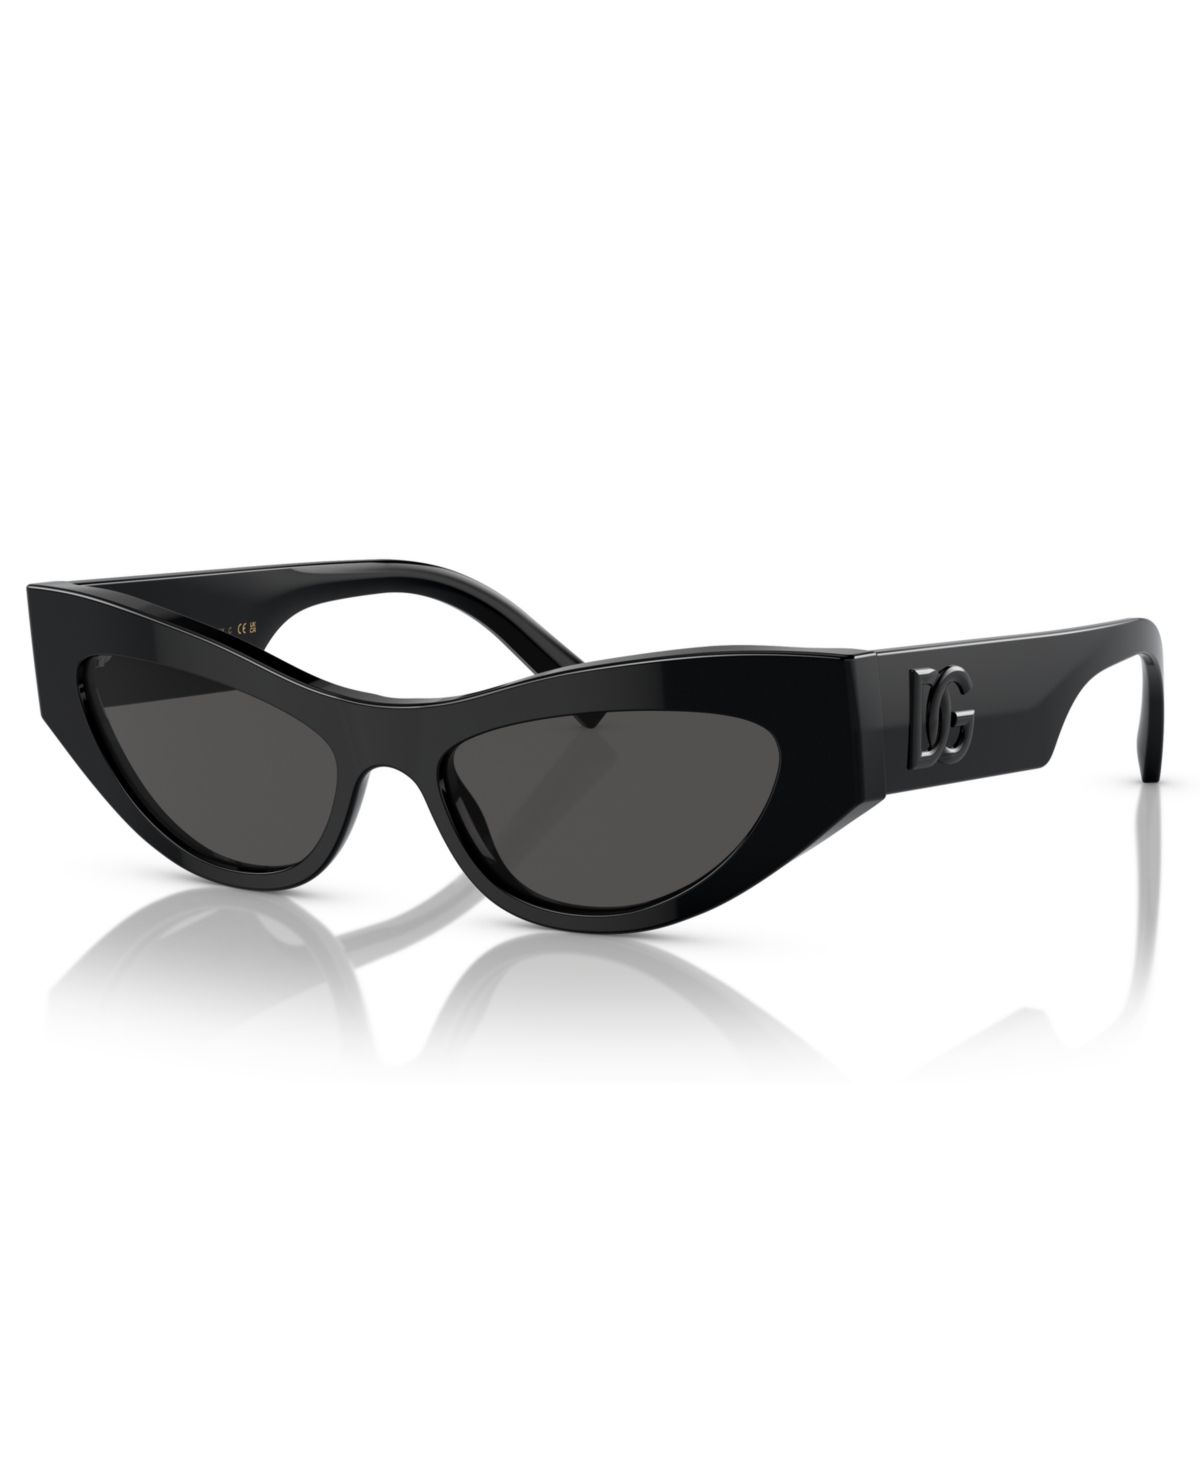 Dolce&Gabbana Women's Low Bridge Fit Sunglasses DG4450F - Black